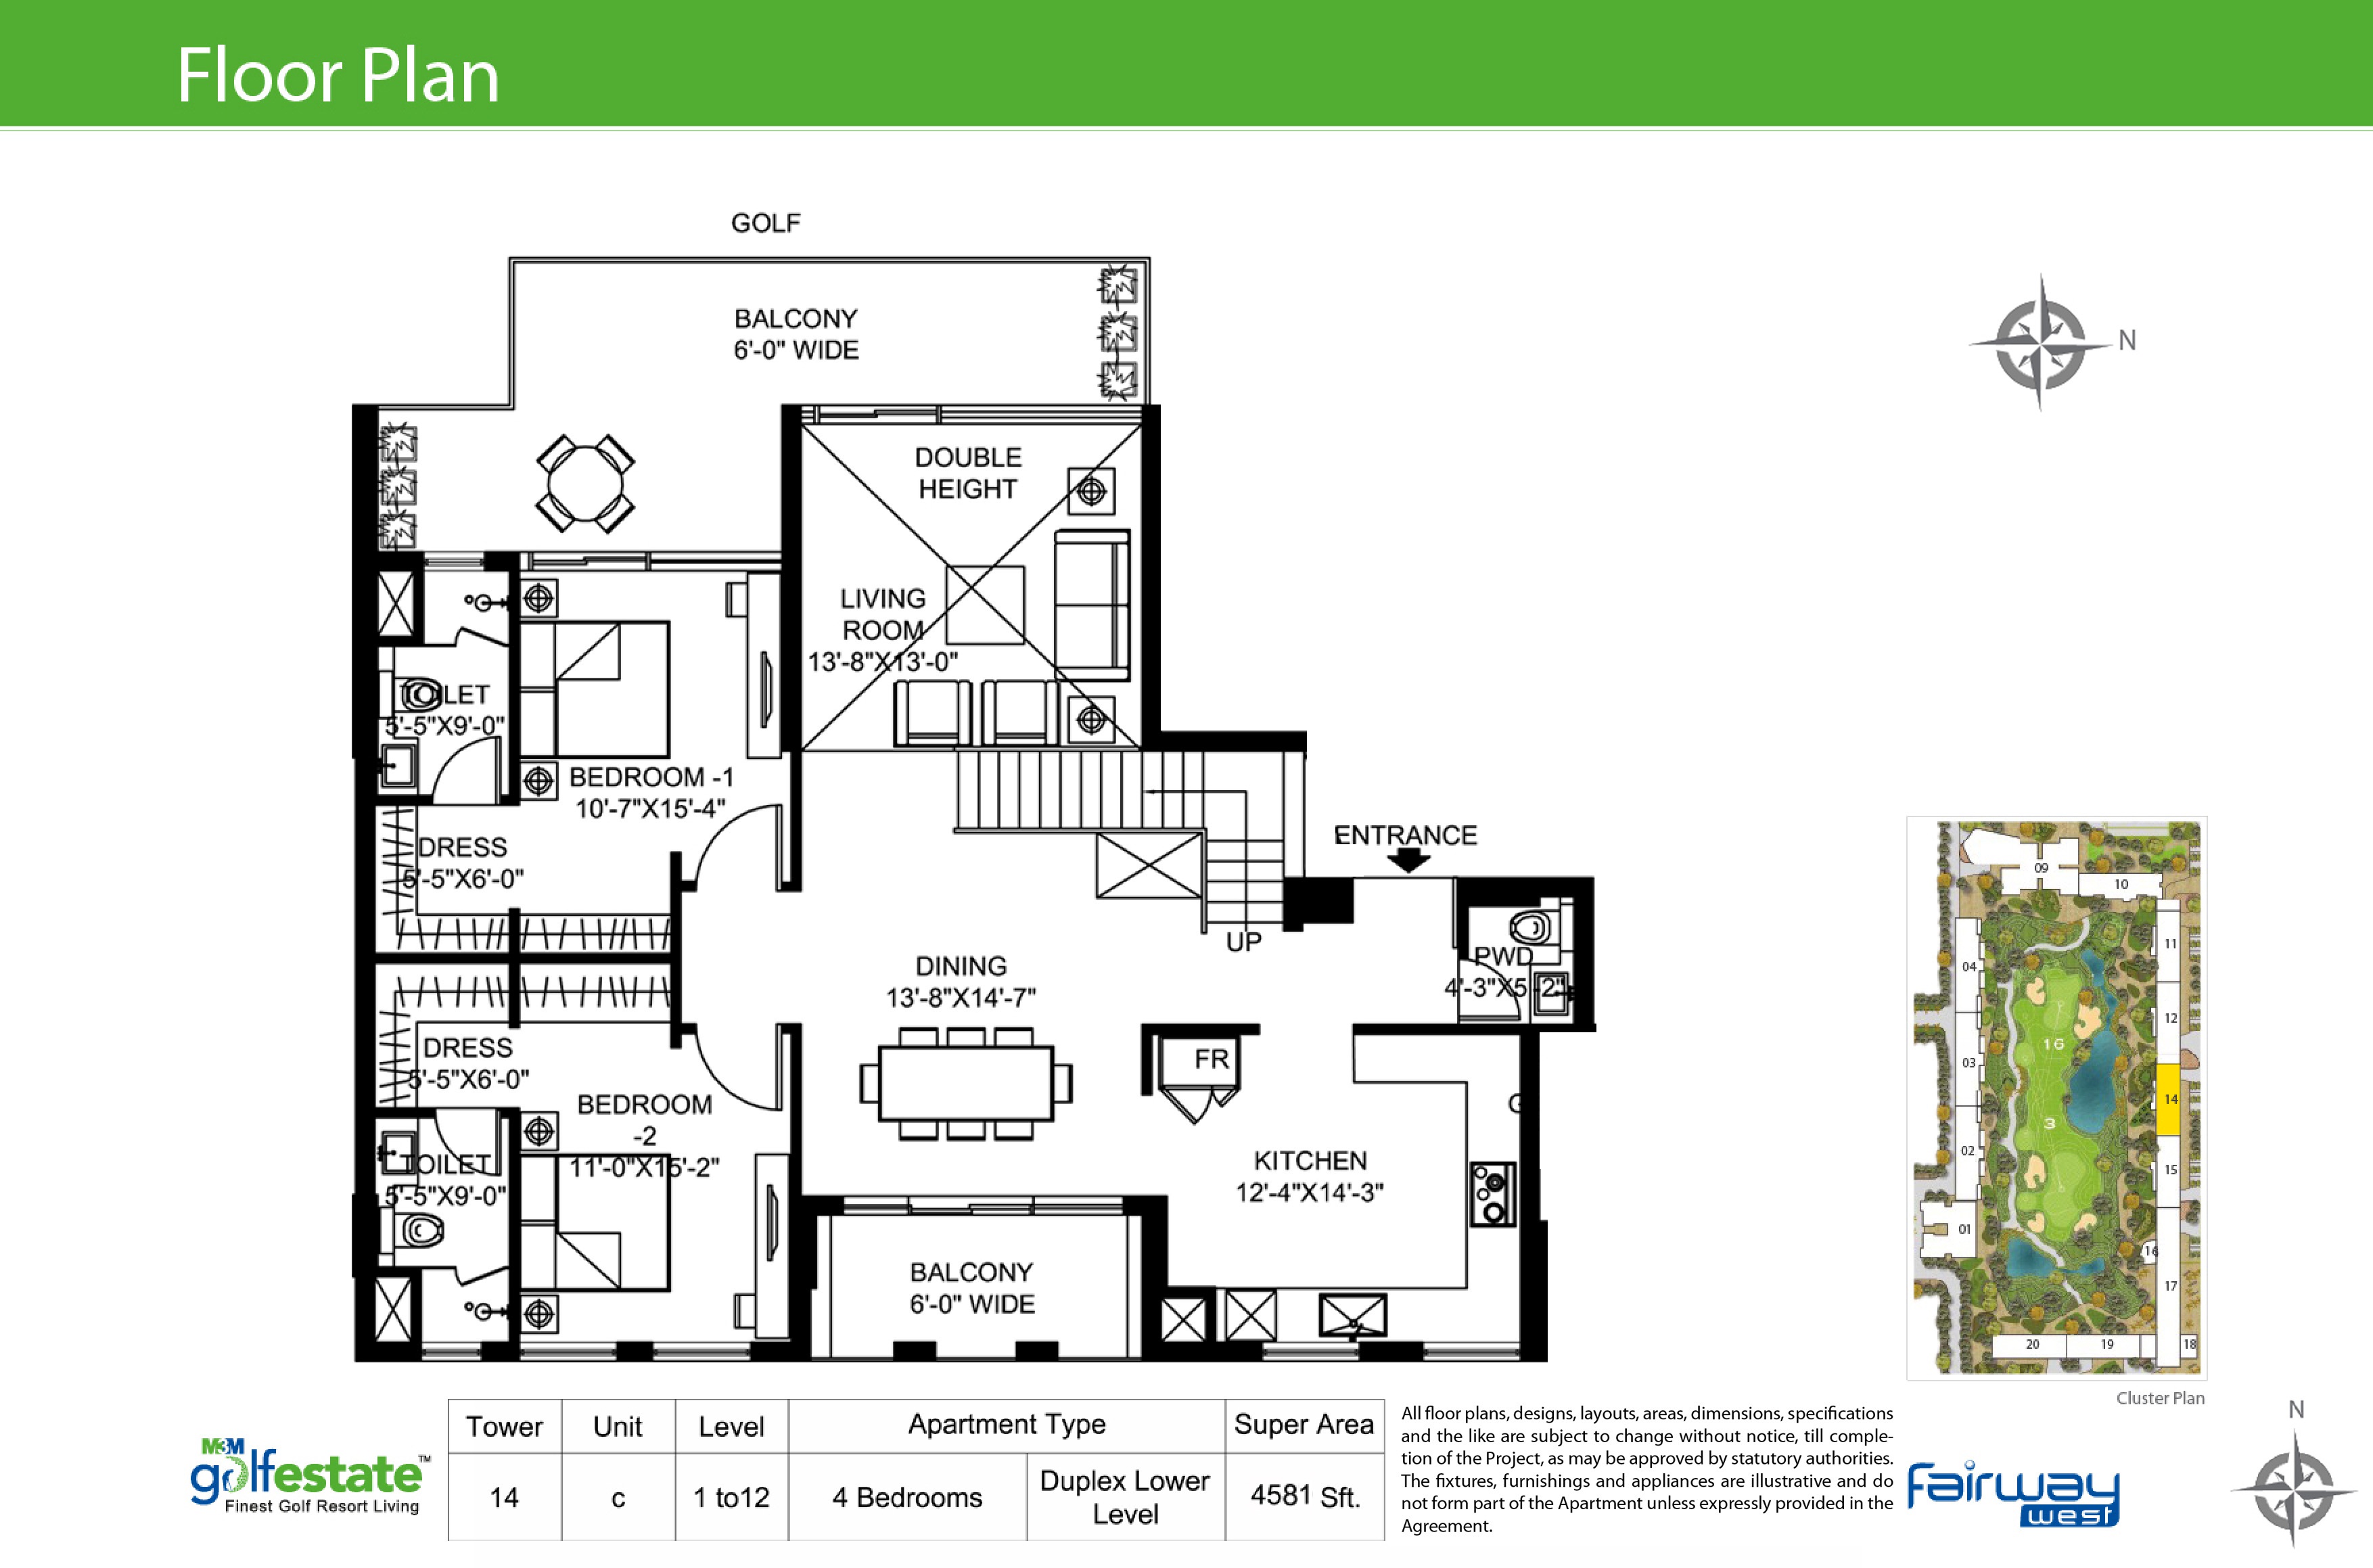 Floor plan of M3M Golf estate Fairway West 4581Sqft